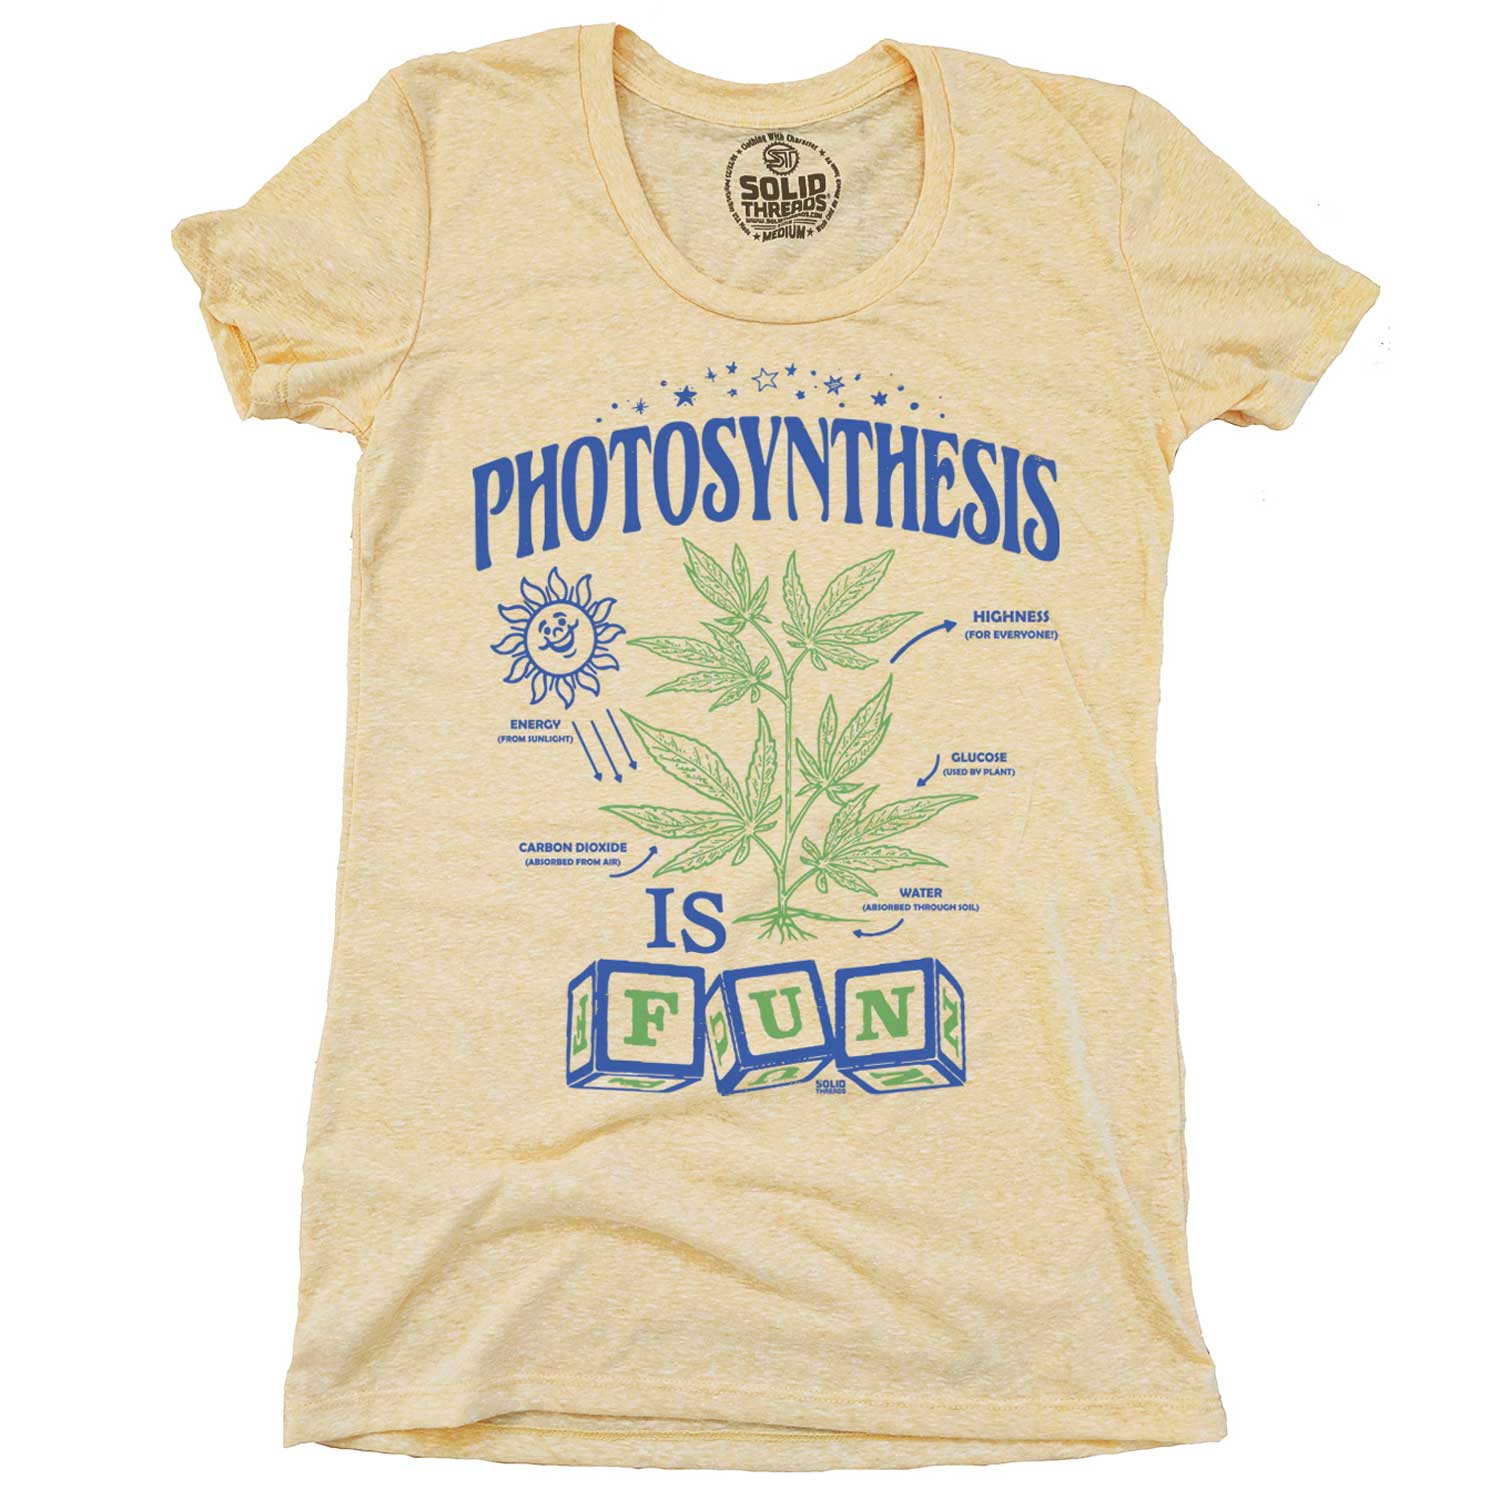 Marijuana & T-shirts | Cool CBD Graphic Tees for 420 Threads